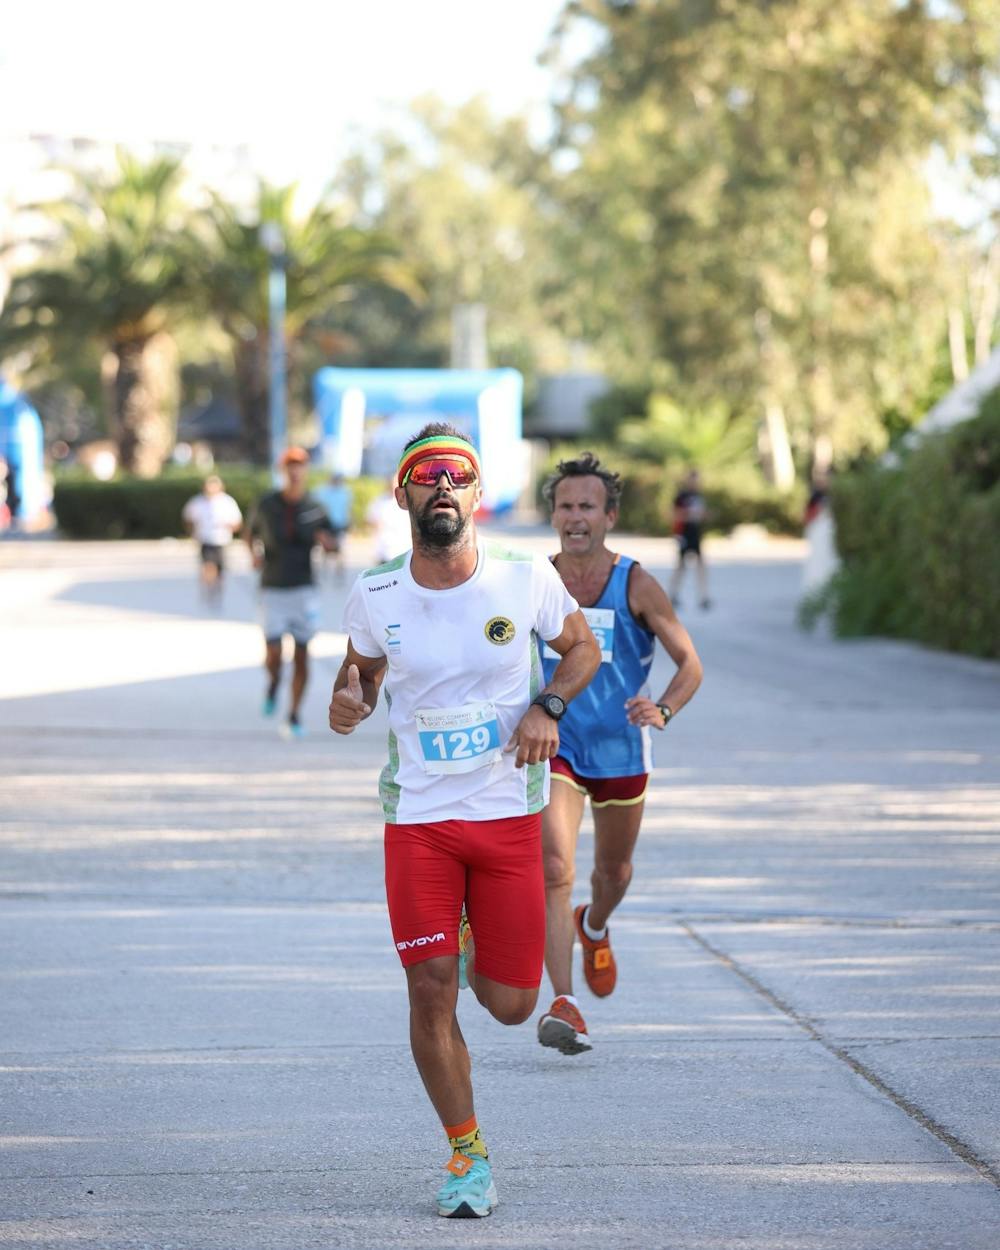 Athens Company Run: Με επιτυχία ολοκληρώθηκε το μεγάλο δρομικό event των 10ων Εθνικών Αγώνων Εργασιακού Αθλητισμού! runbeat.gr 